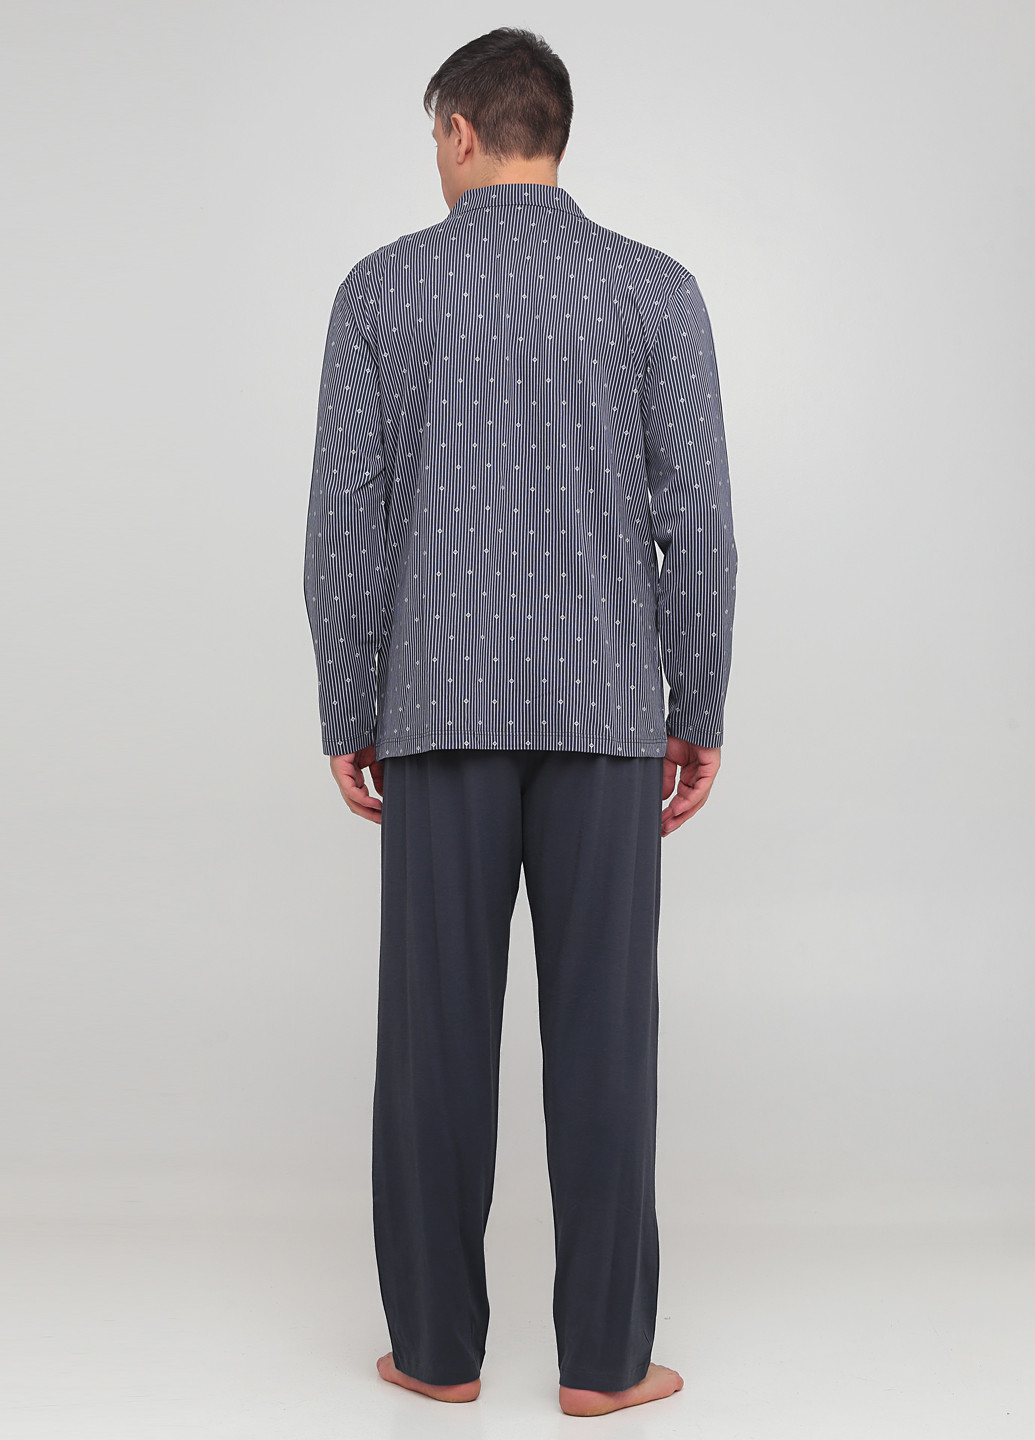 Піжама (сорочка, штани) Calida рубашка + брюки малюнок сіра домашня бавовна